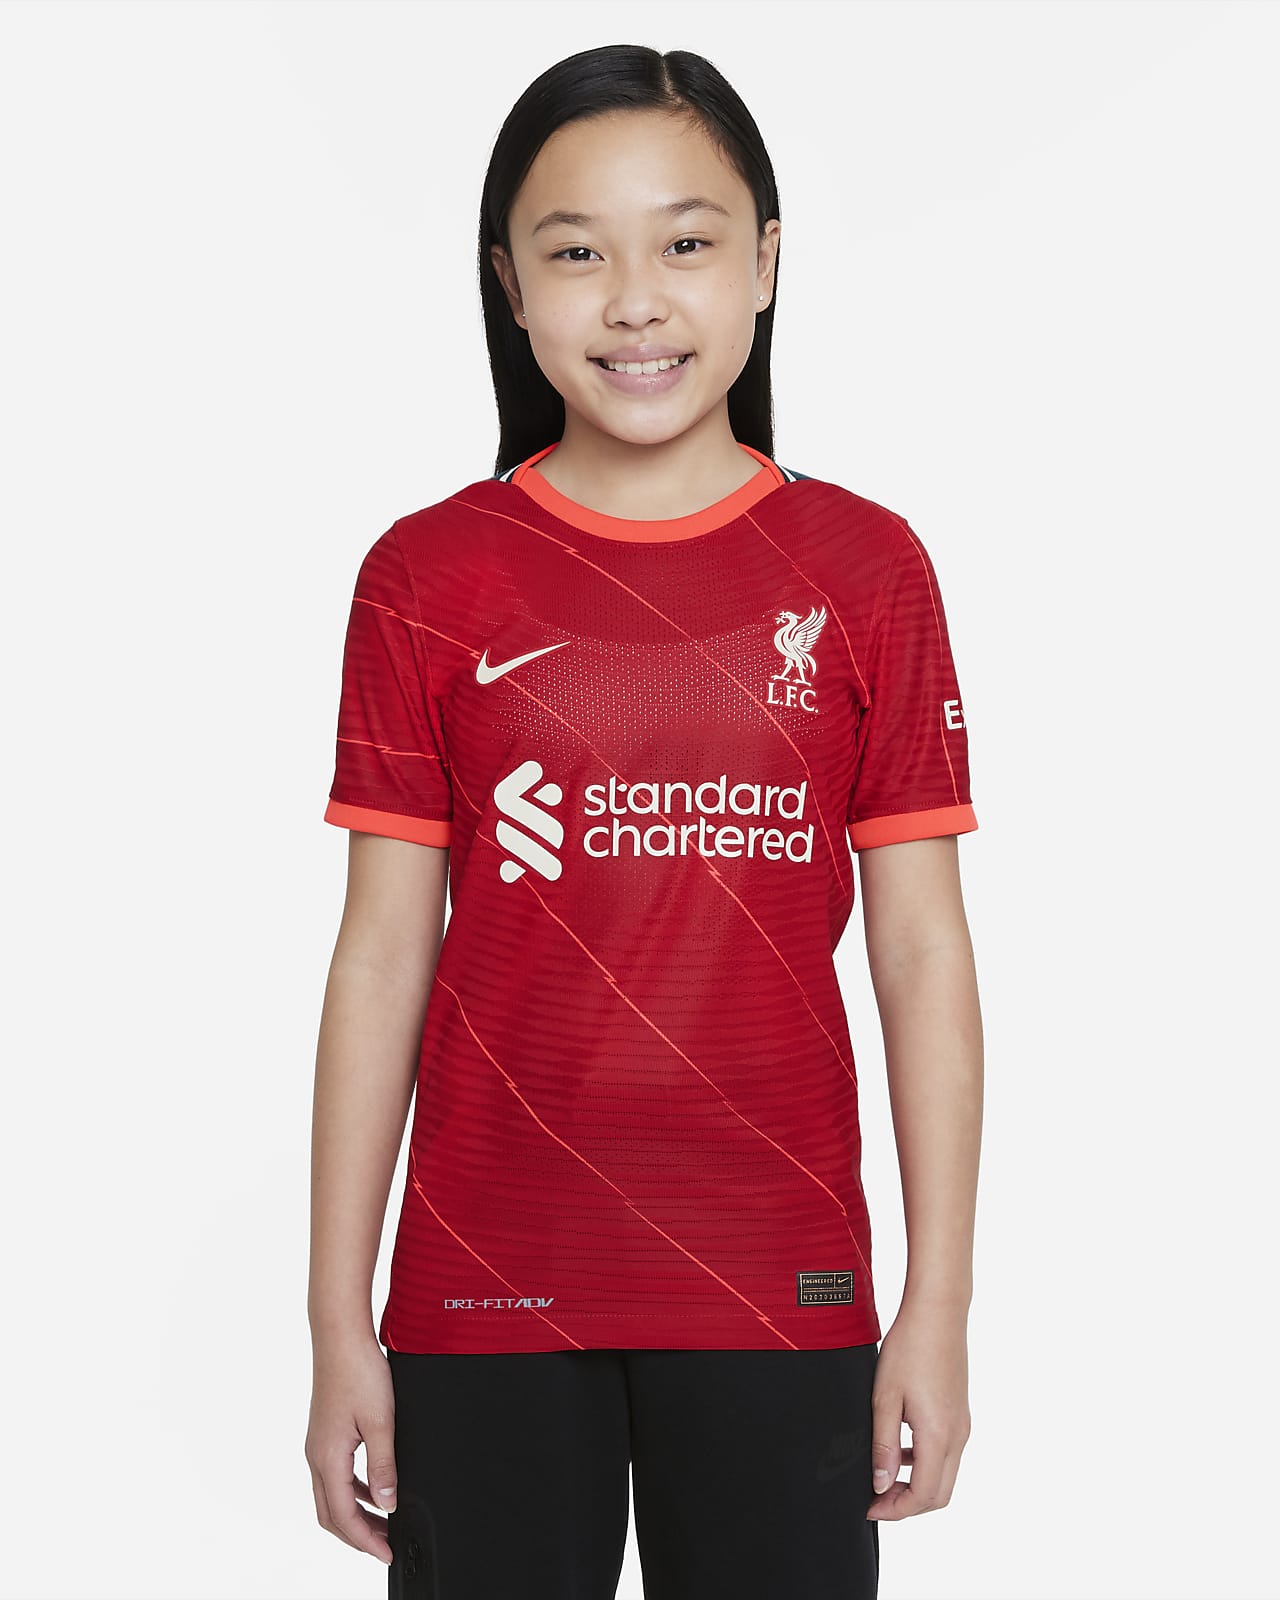 Liverpool F.C. 2021/22 Match Home Older Kids' Nike Dri-FIT ADV Football Shirt